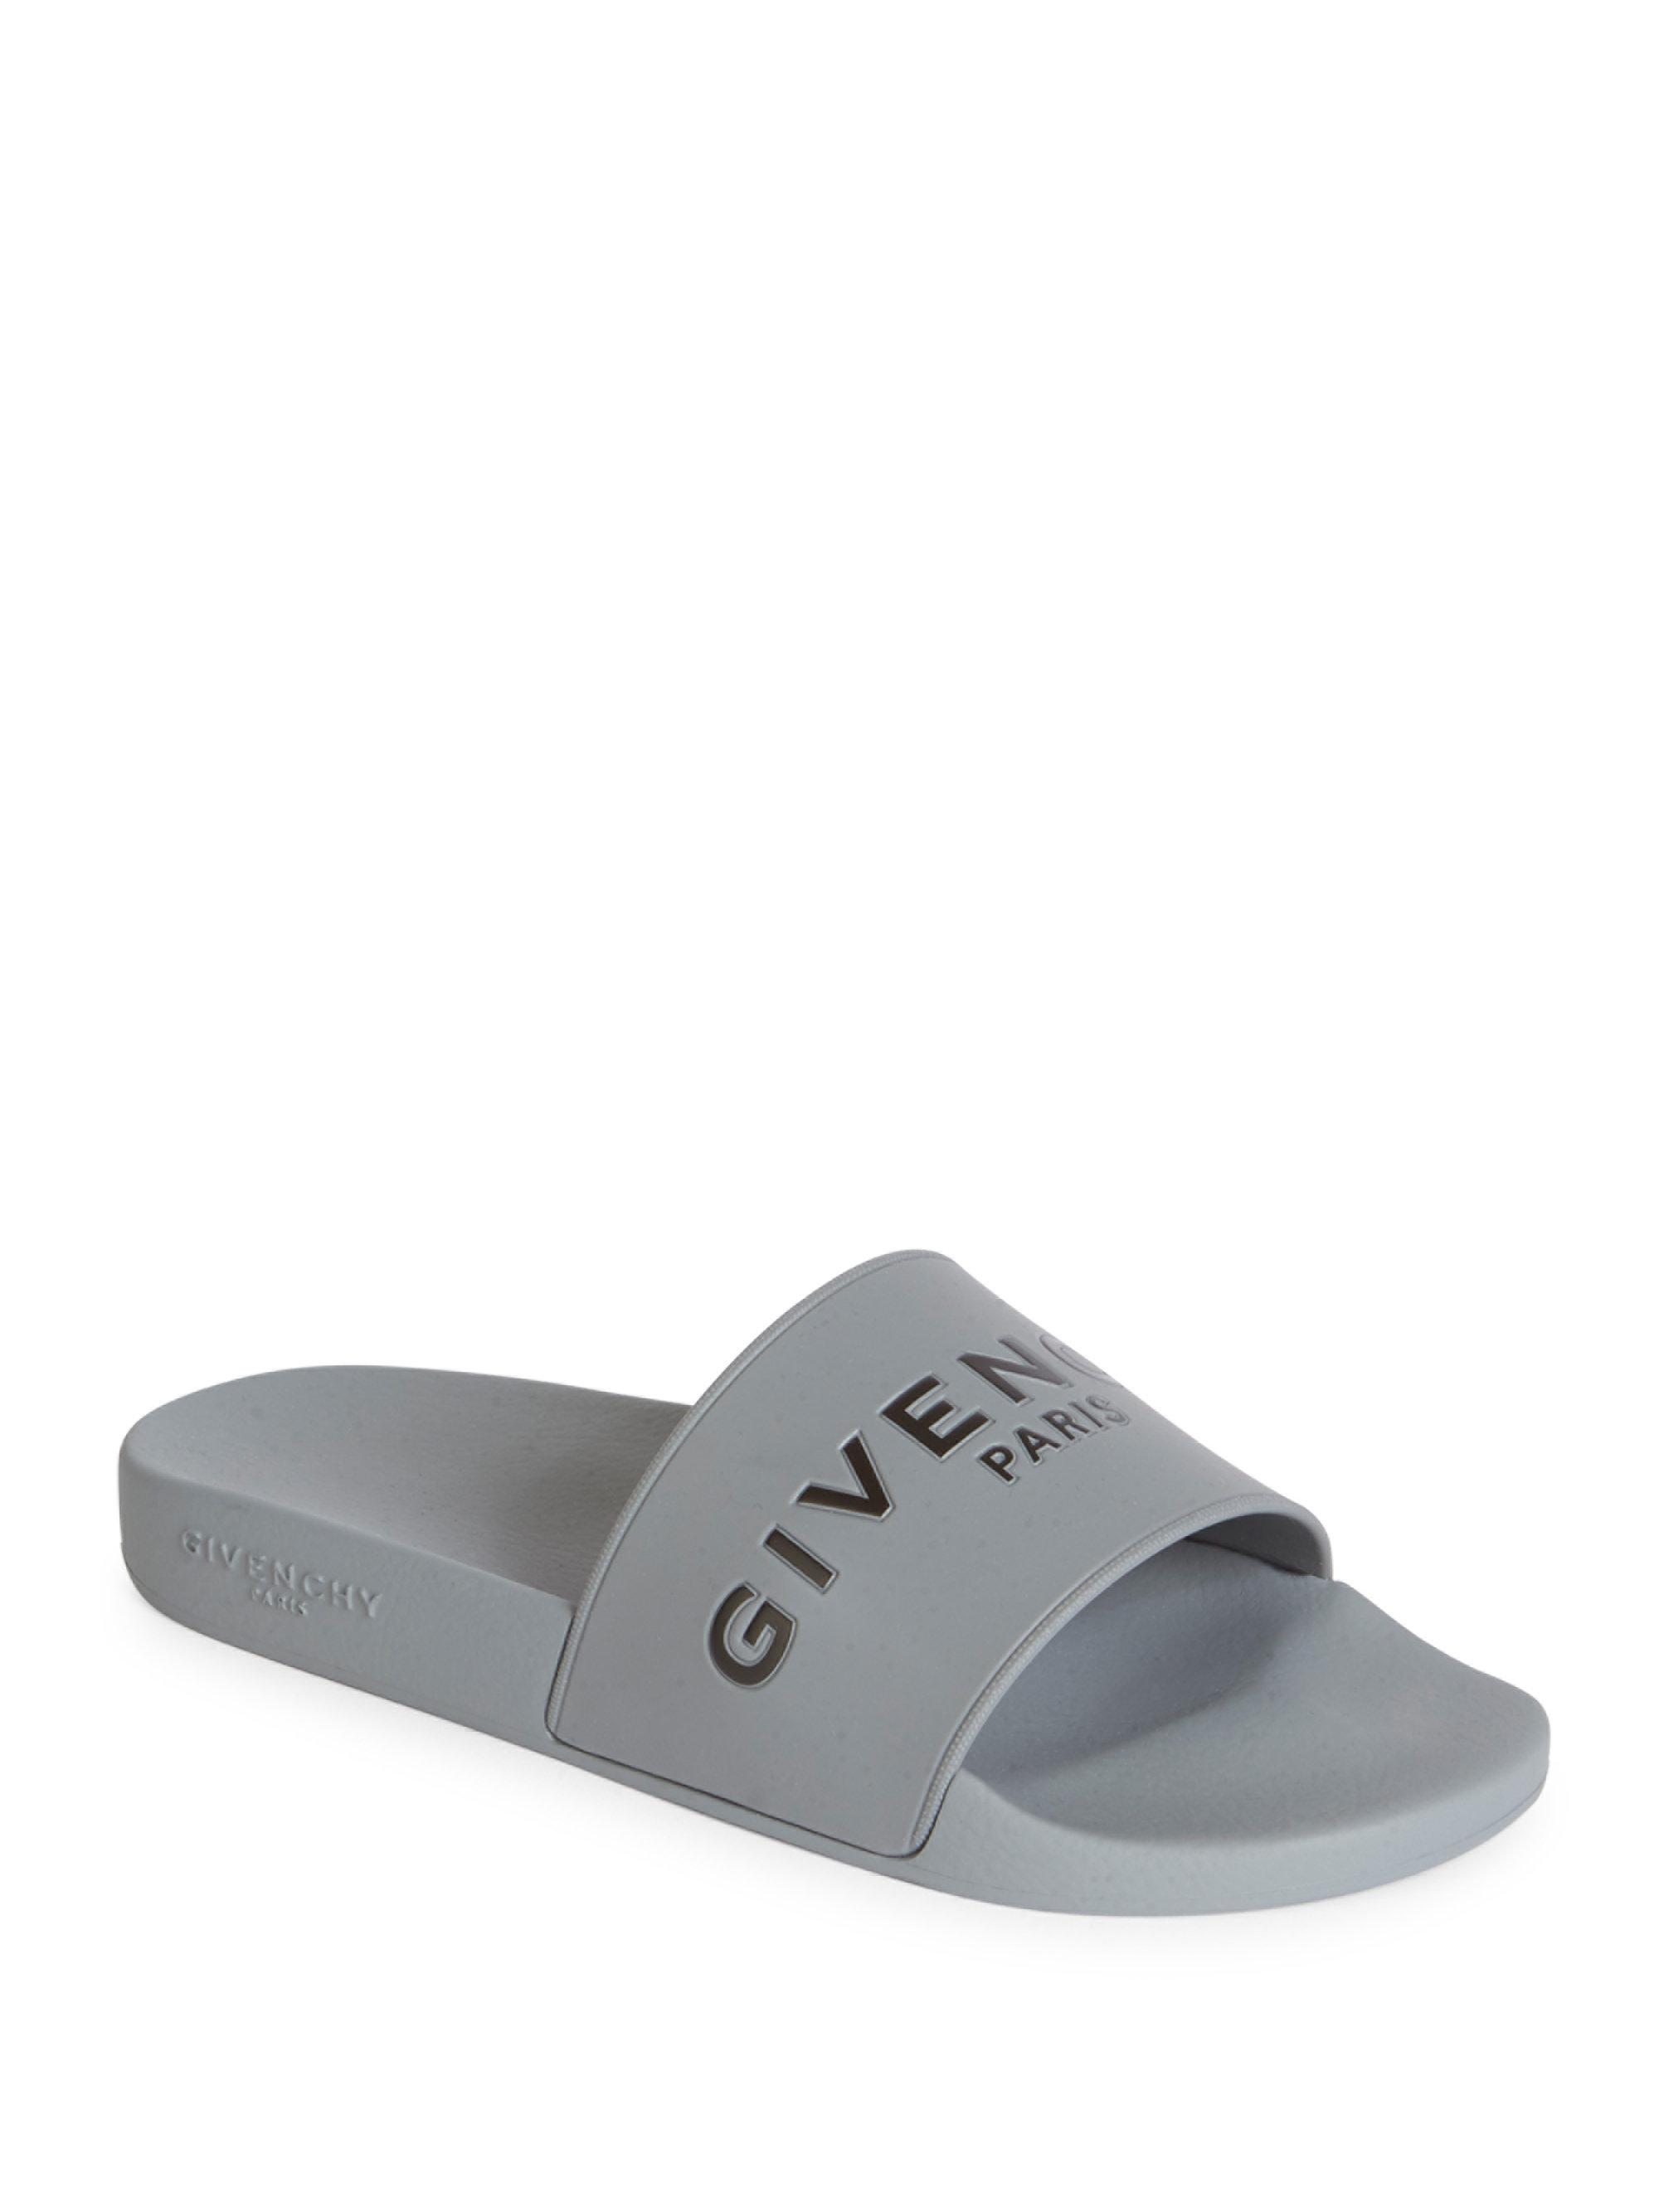 Lyst - Givenchy Logo Rubber Slides in Gray for Men